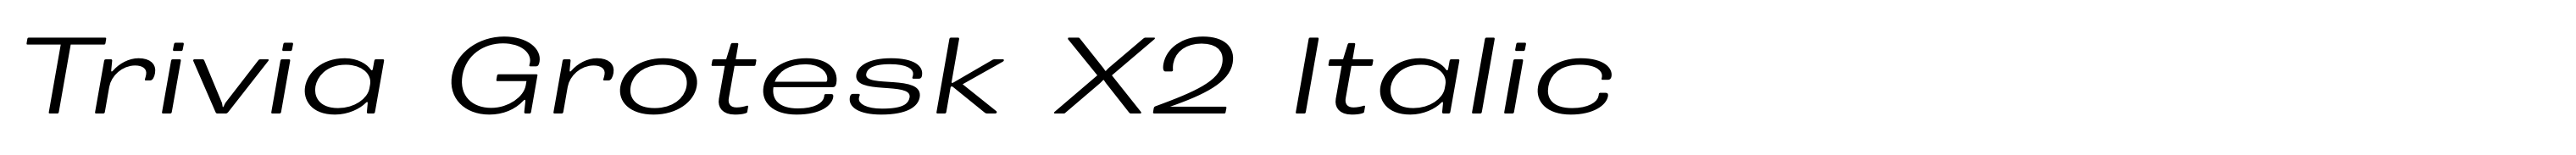 Trivia Grotesk X2 Italic